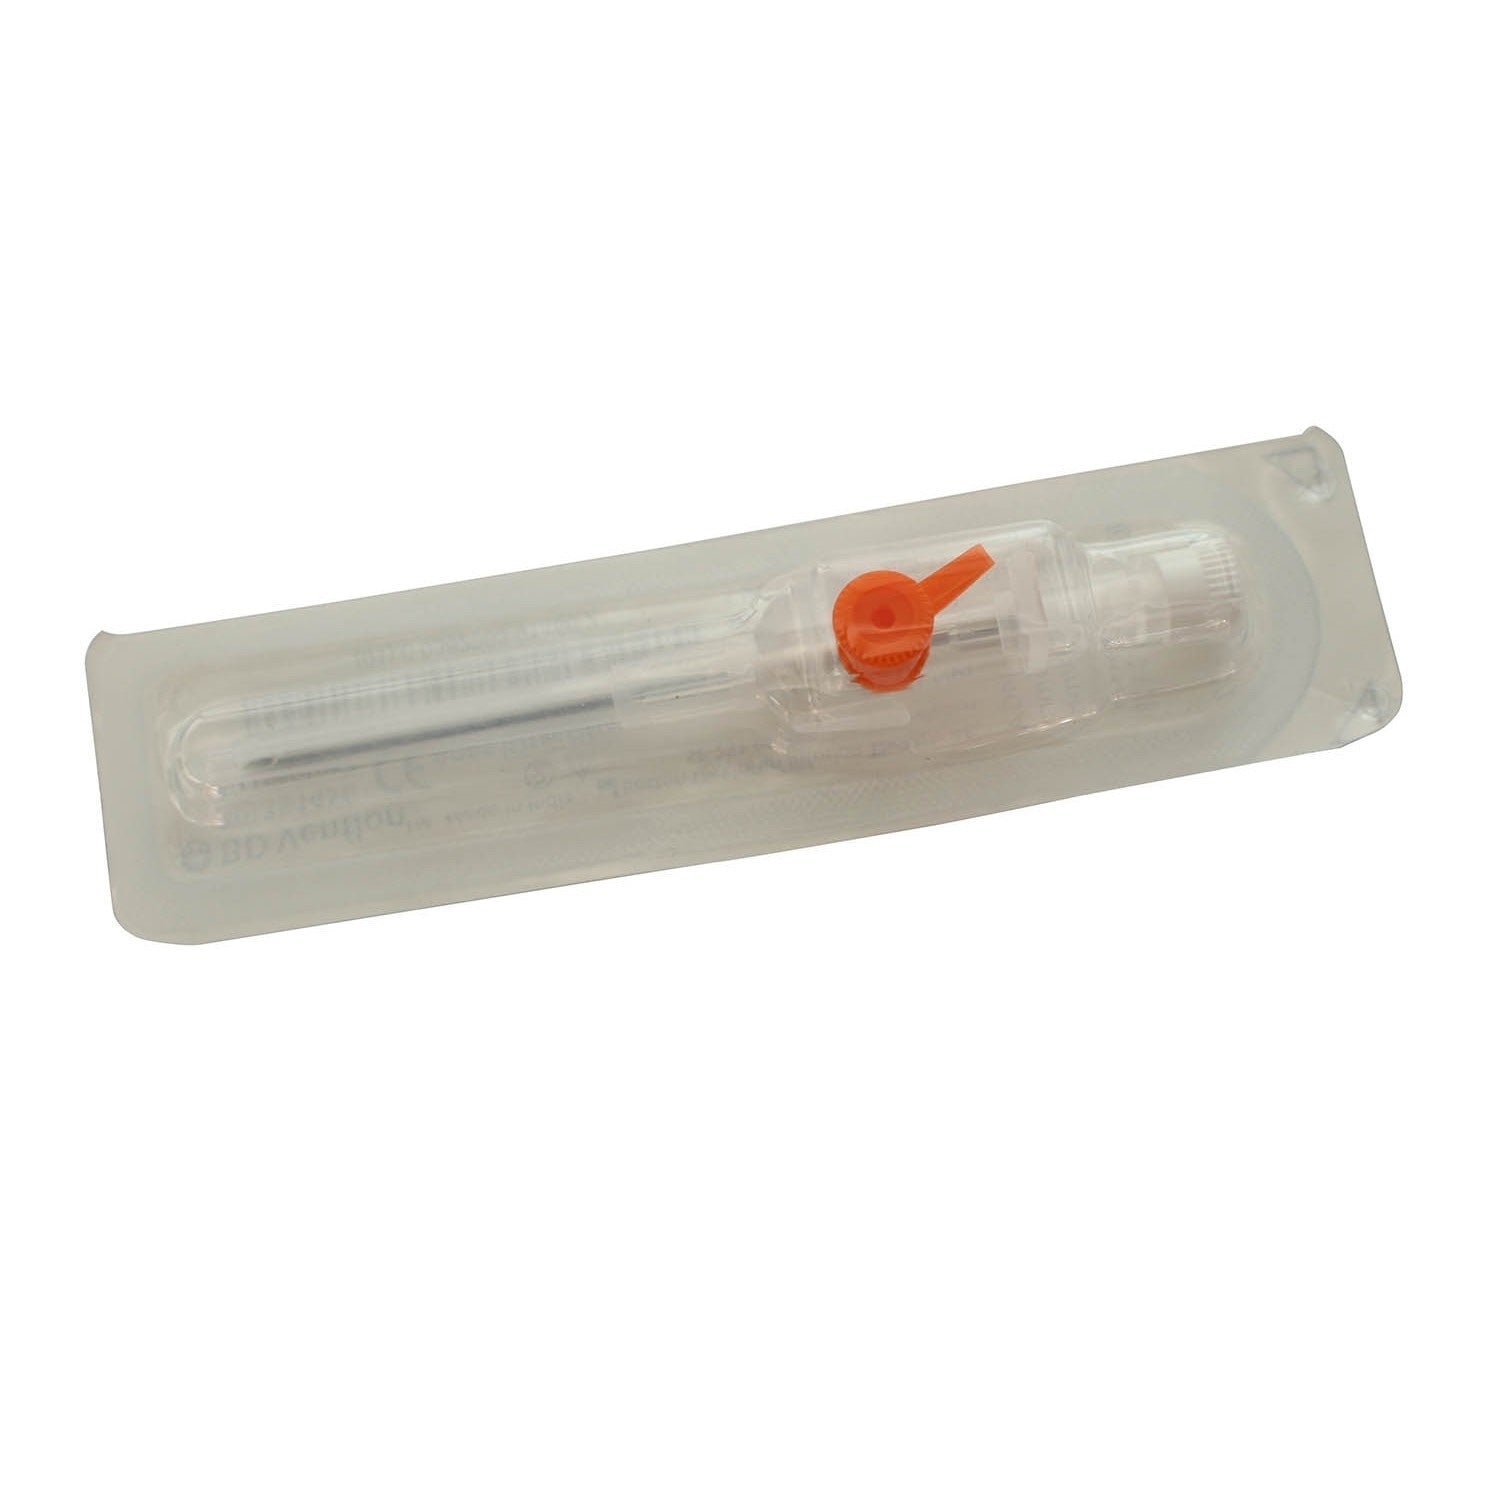 BD Venflon Pro Peripheral IV Cannula with Injection Port | Orange x 14G x 45mm | Single (3)